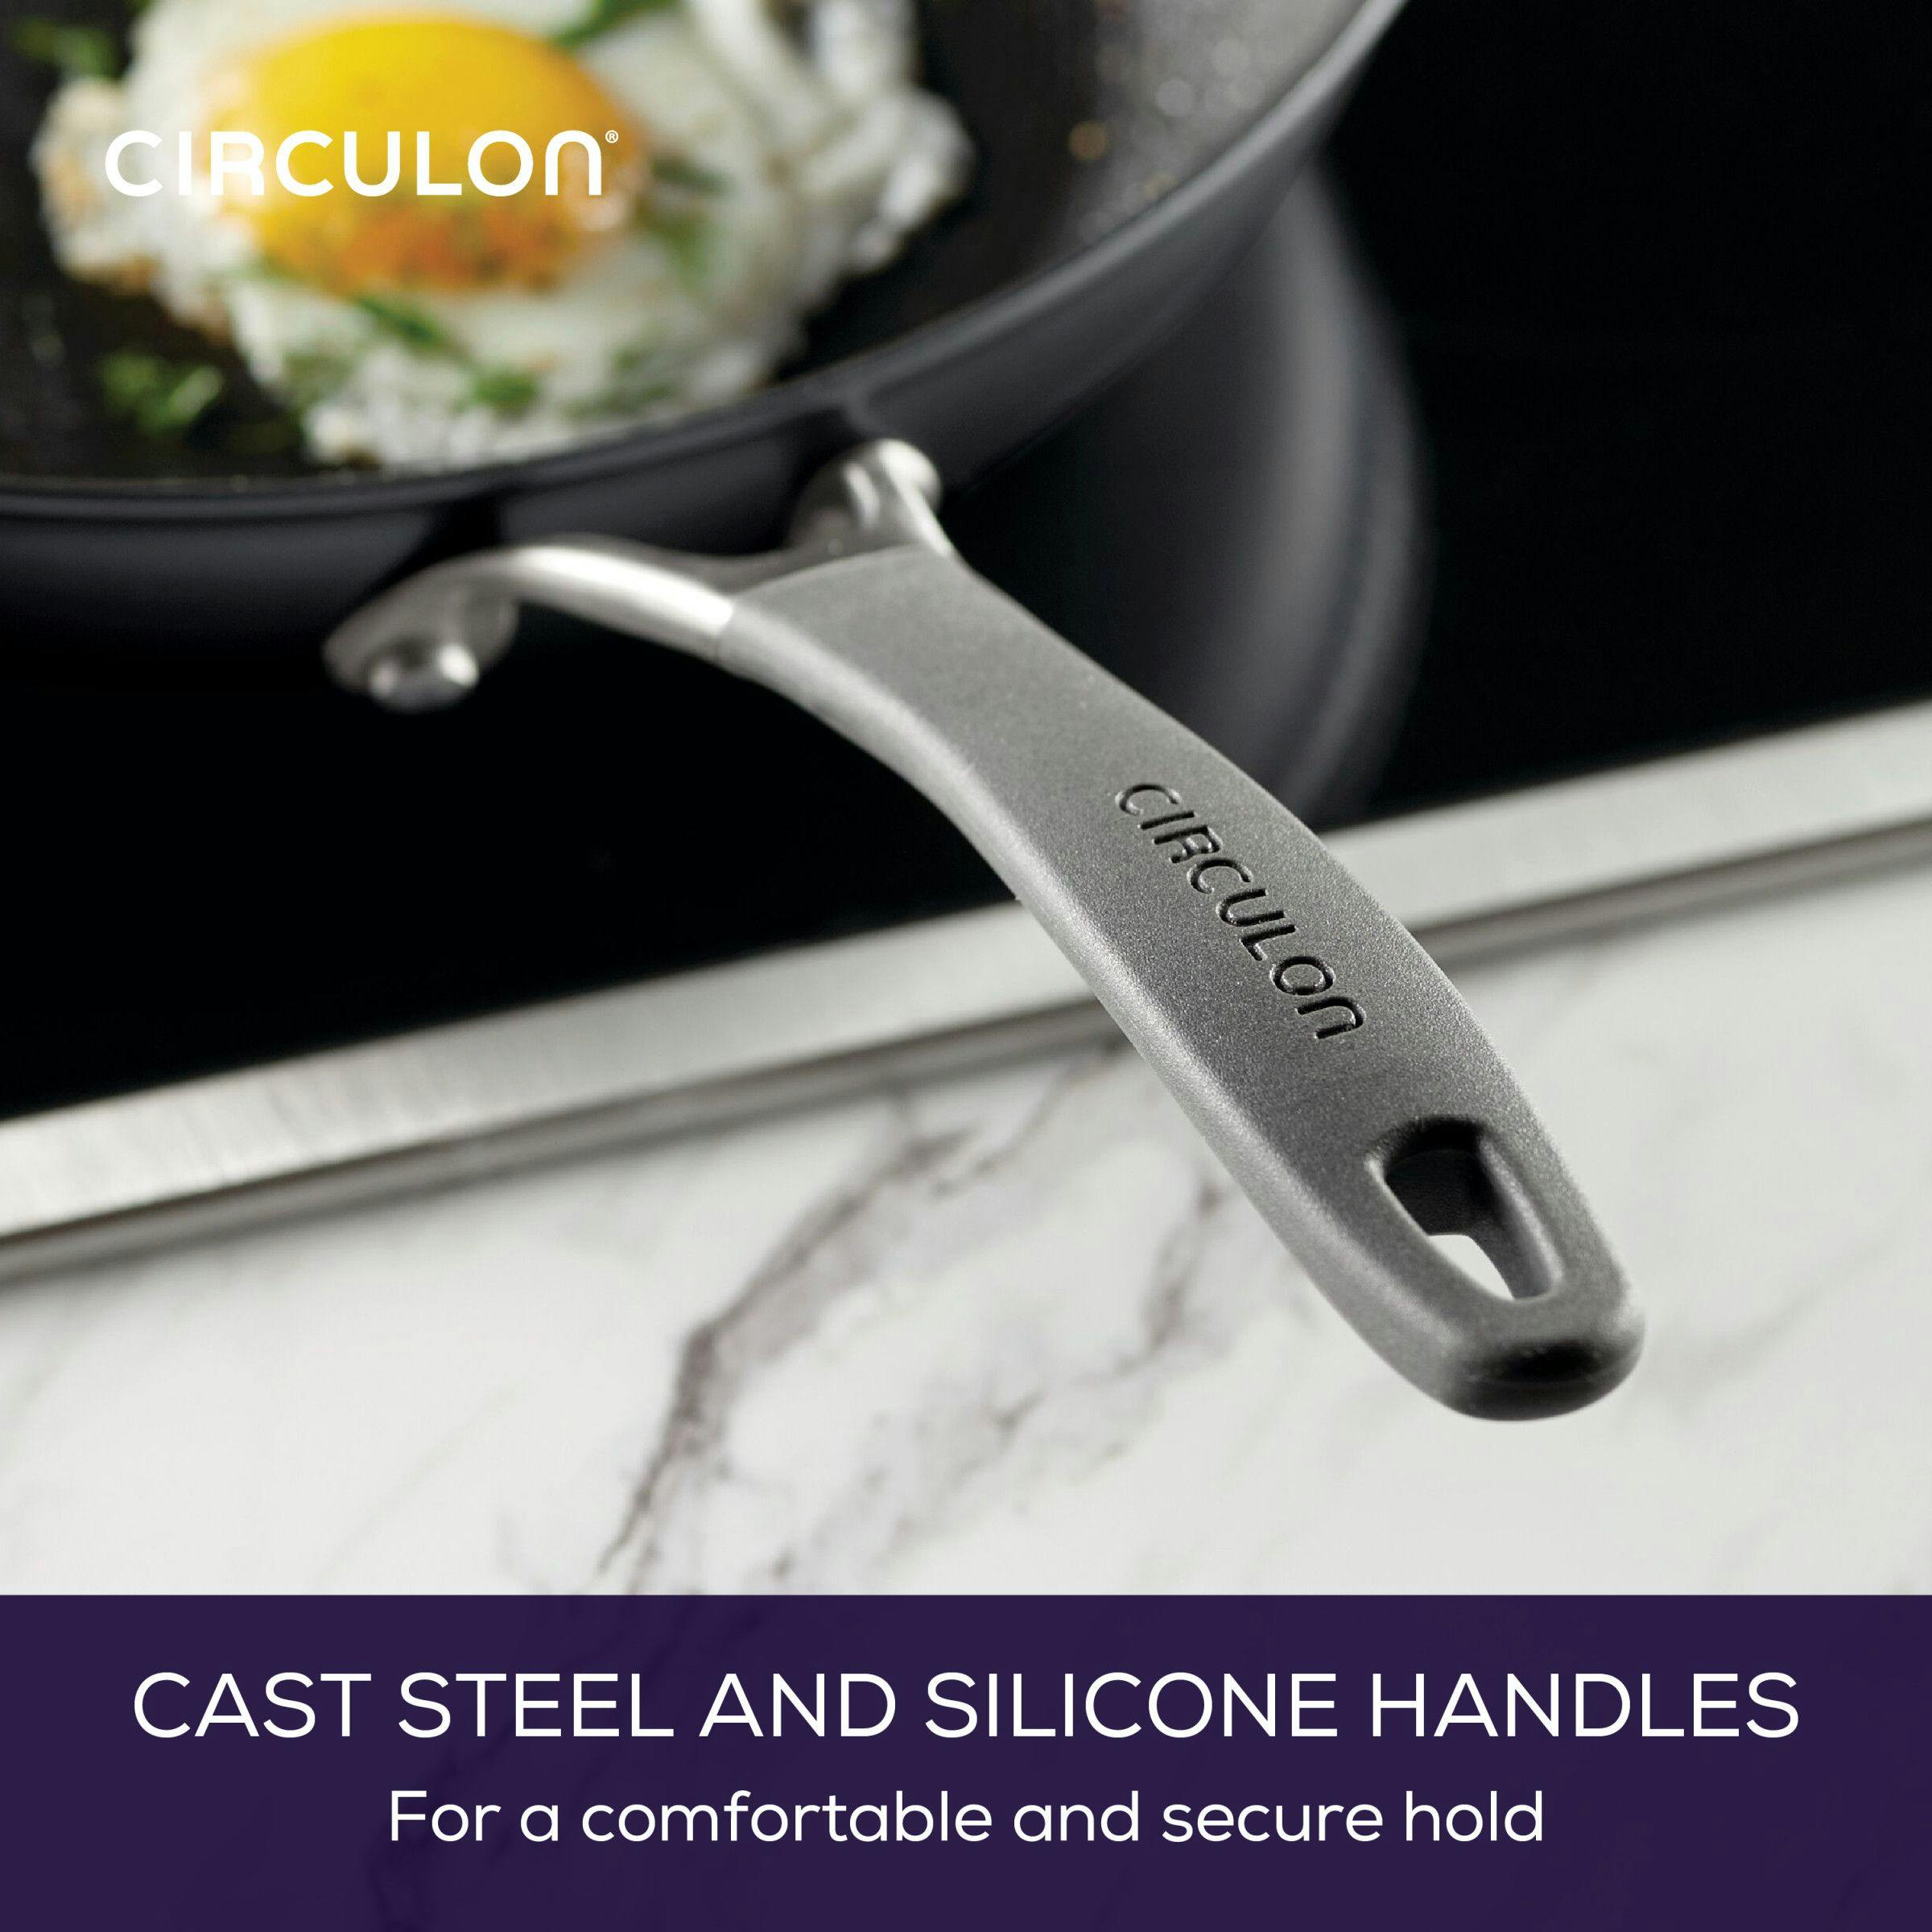 Circulon 8-Piece ScratchDefense A1 Series Nonstick Cookware Set, Graphite